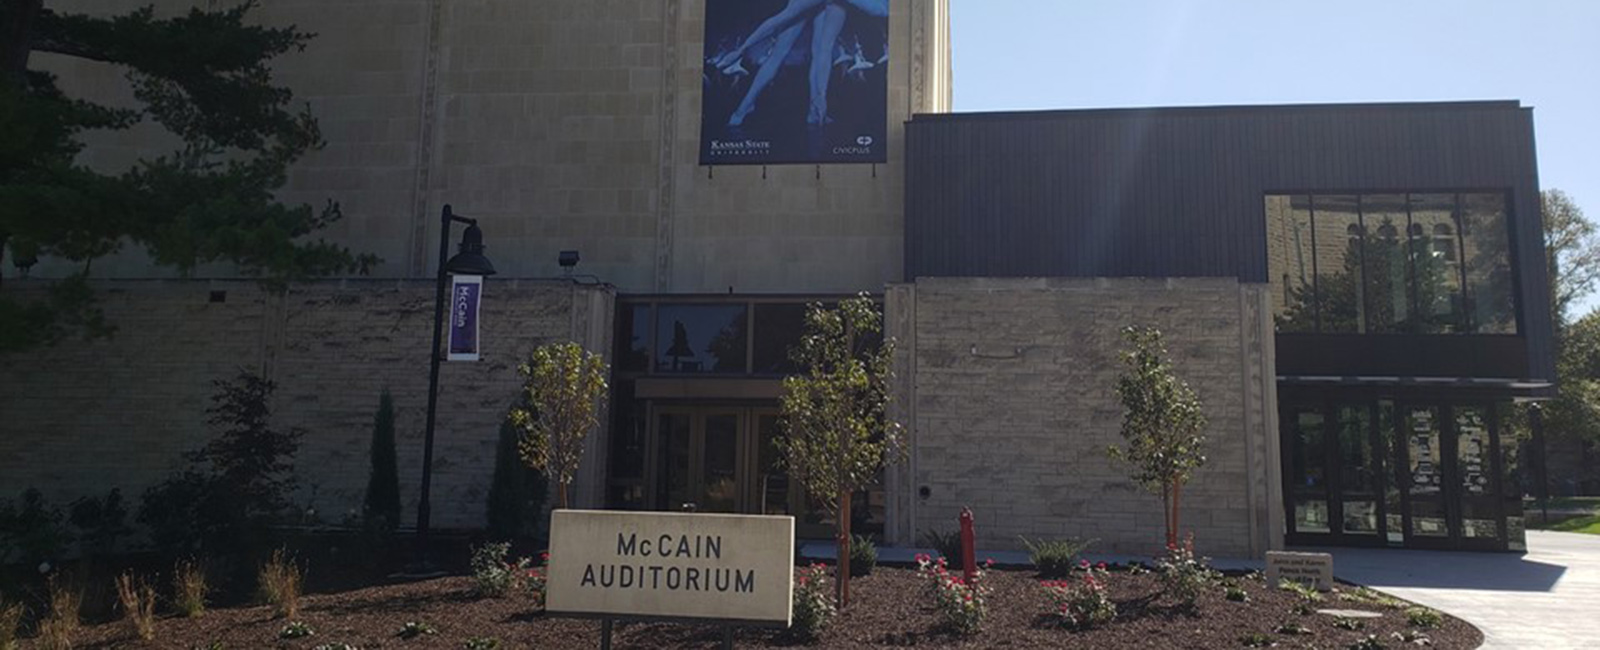 North entrance of McCain Auditorium